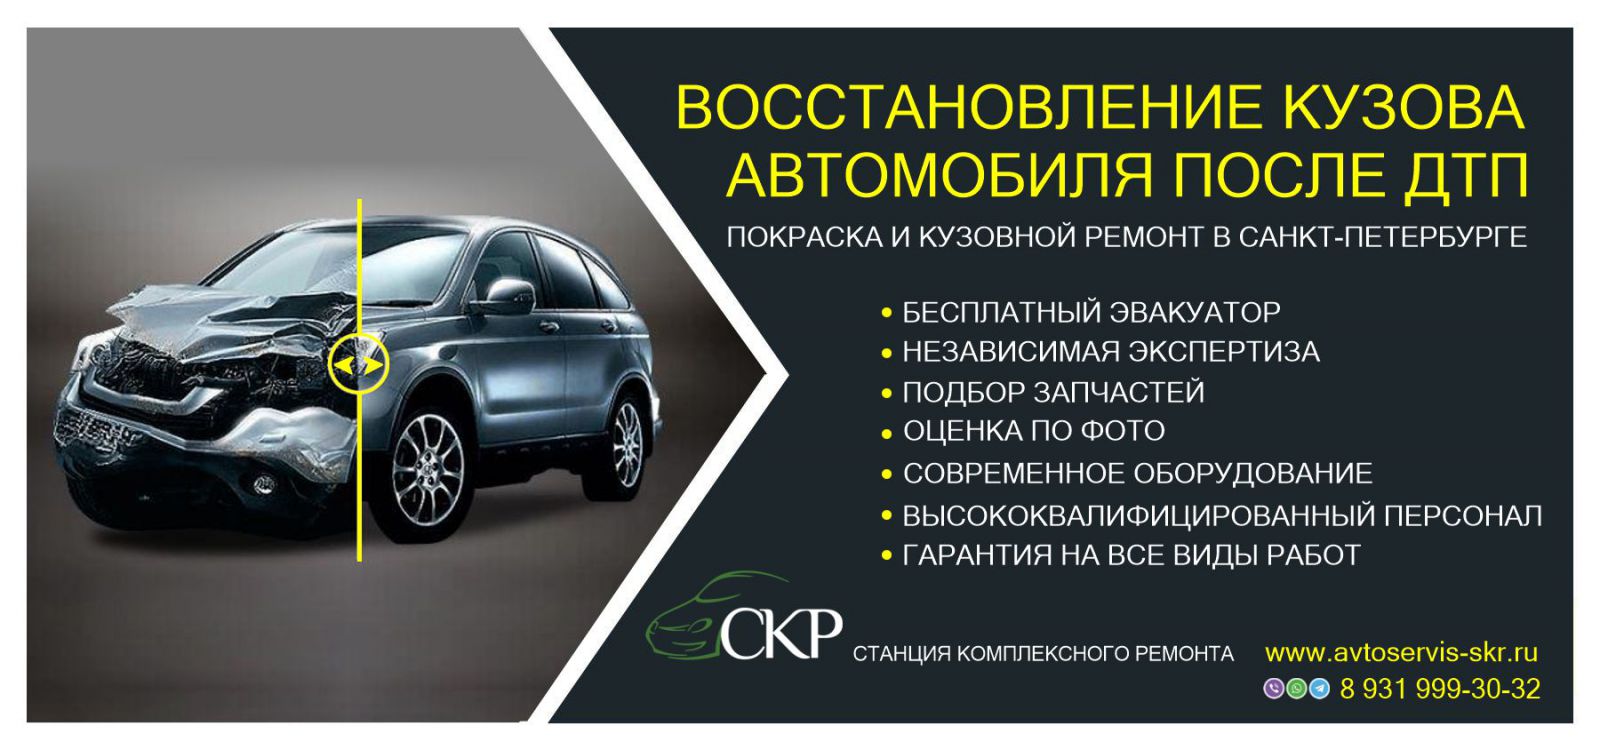 Восстановление кузова после ДТП в СПб в автосервисе СКР